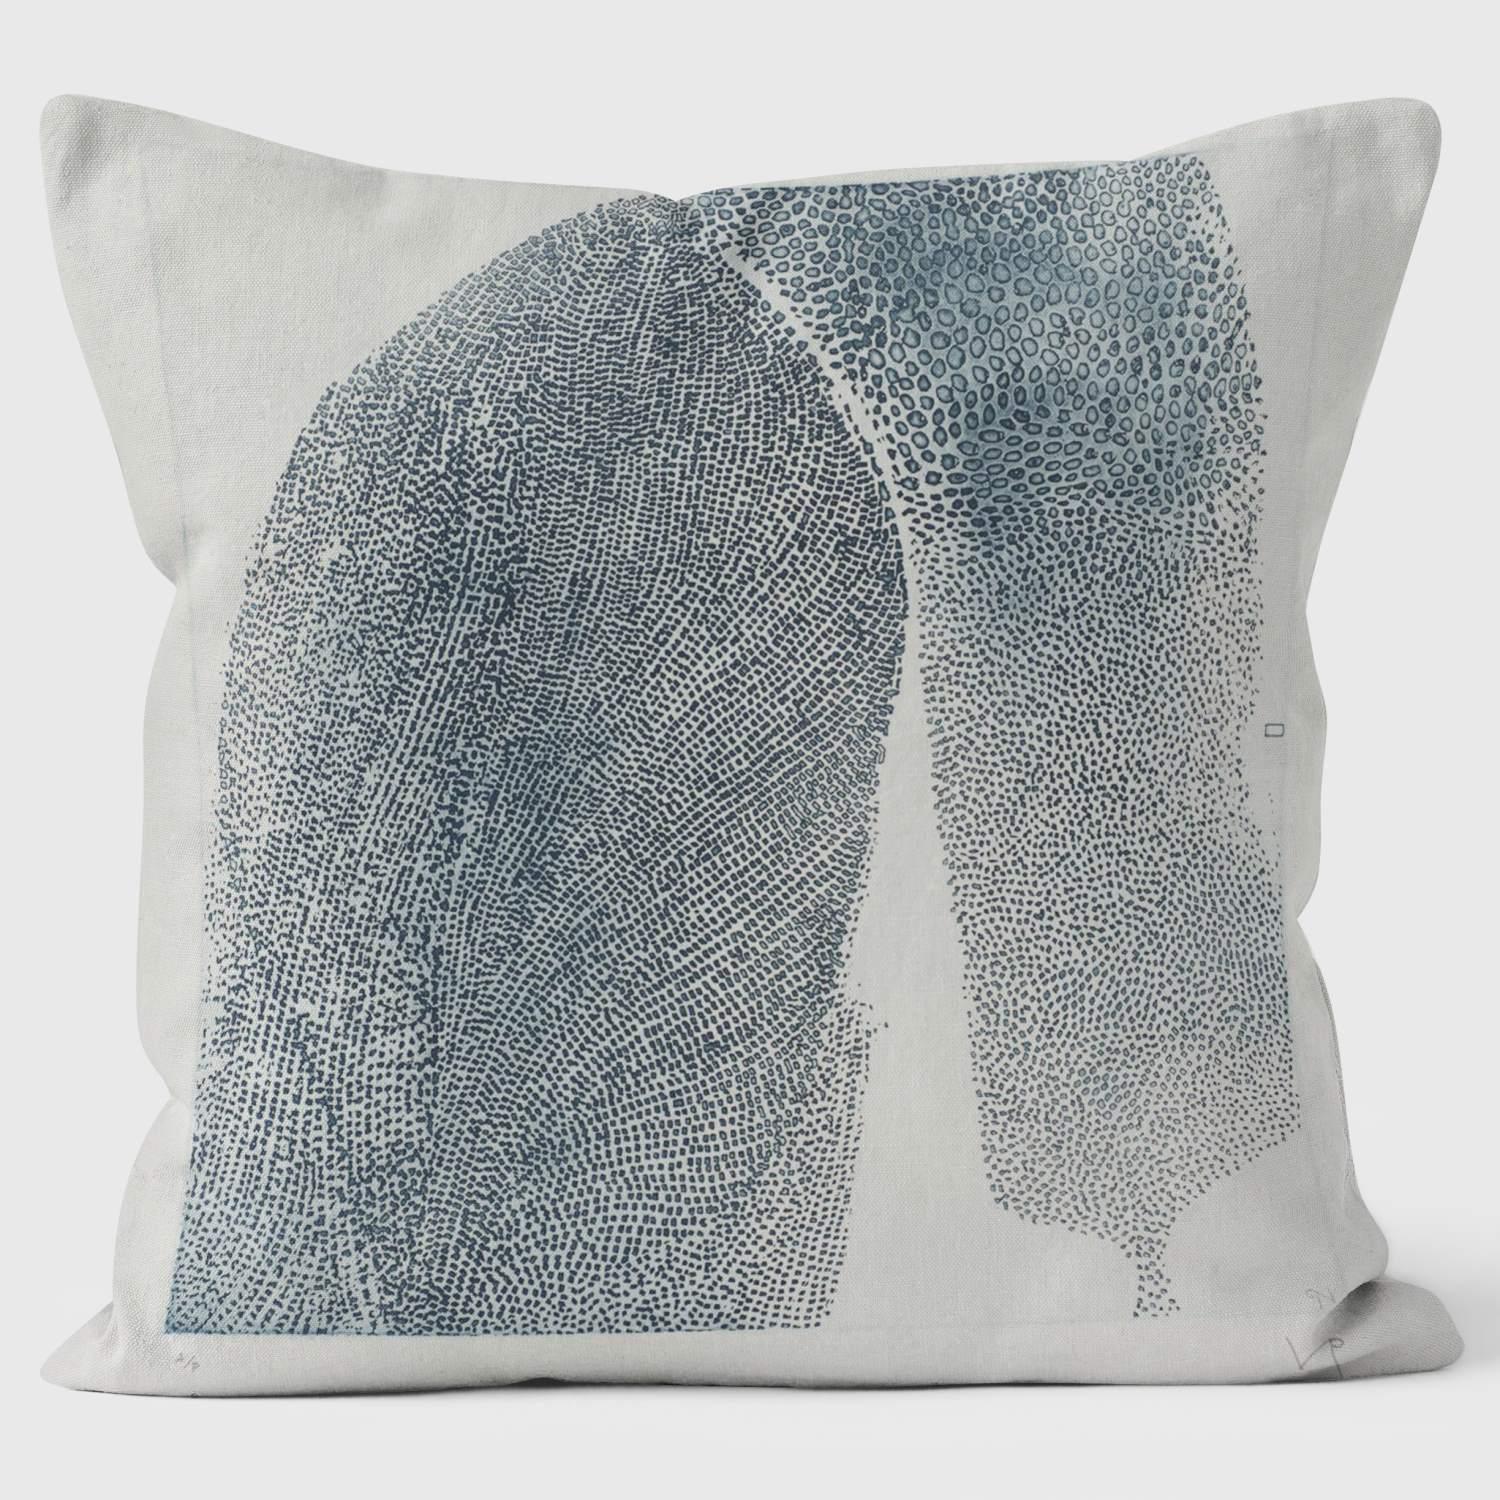 Blue Development -TATE - Victor Pasmore Cushion - Handmade Cushions UK - WeLoveCushions